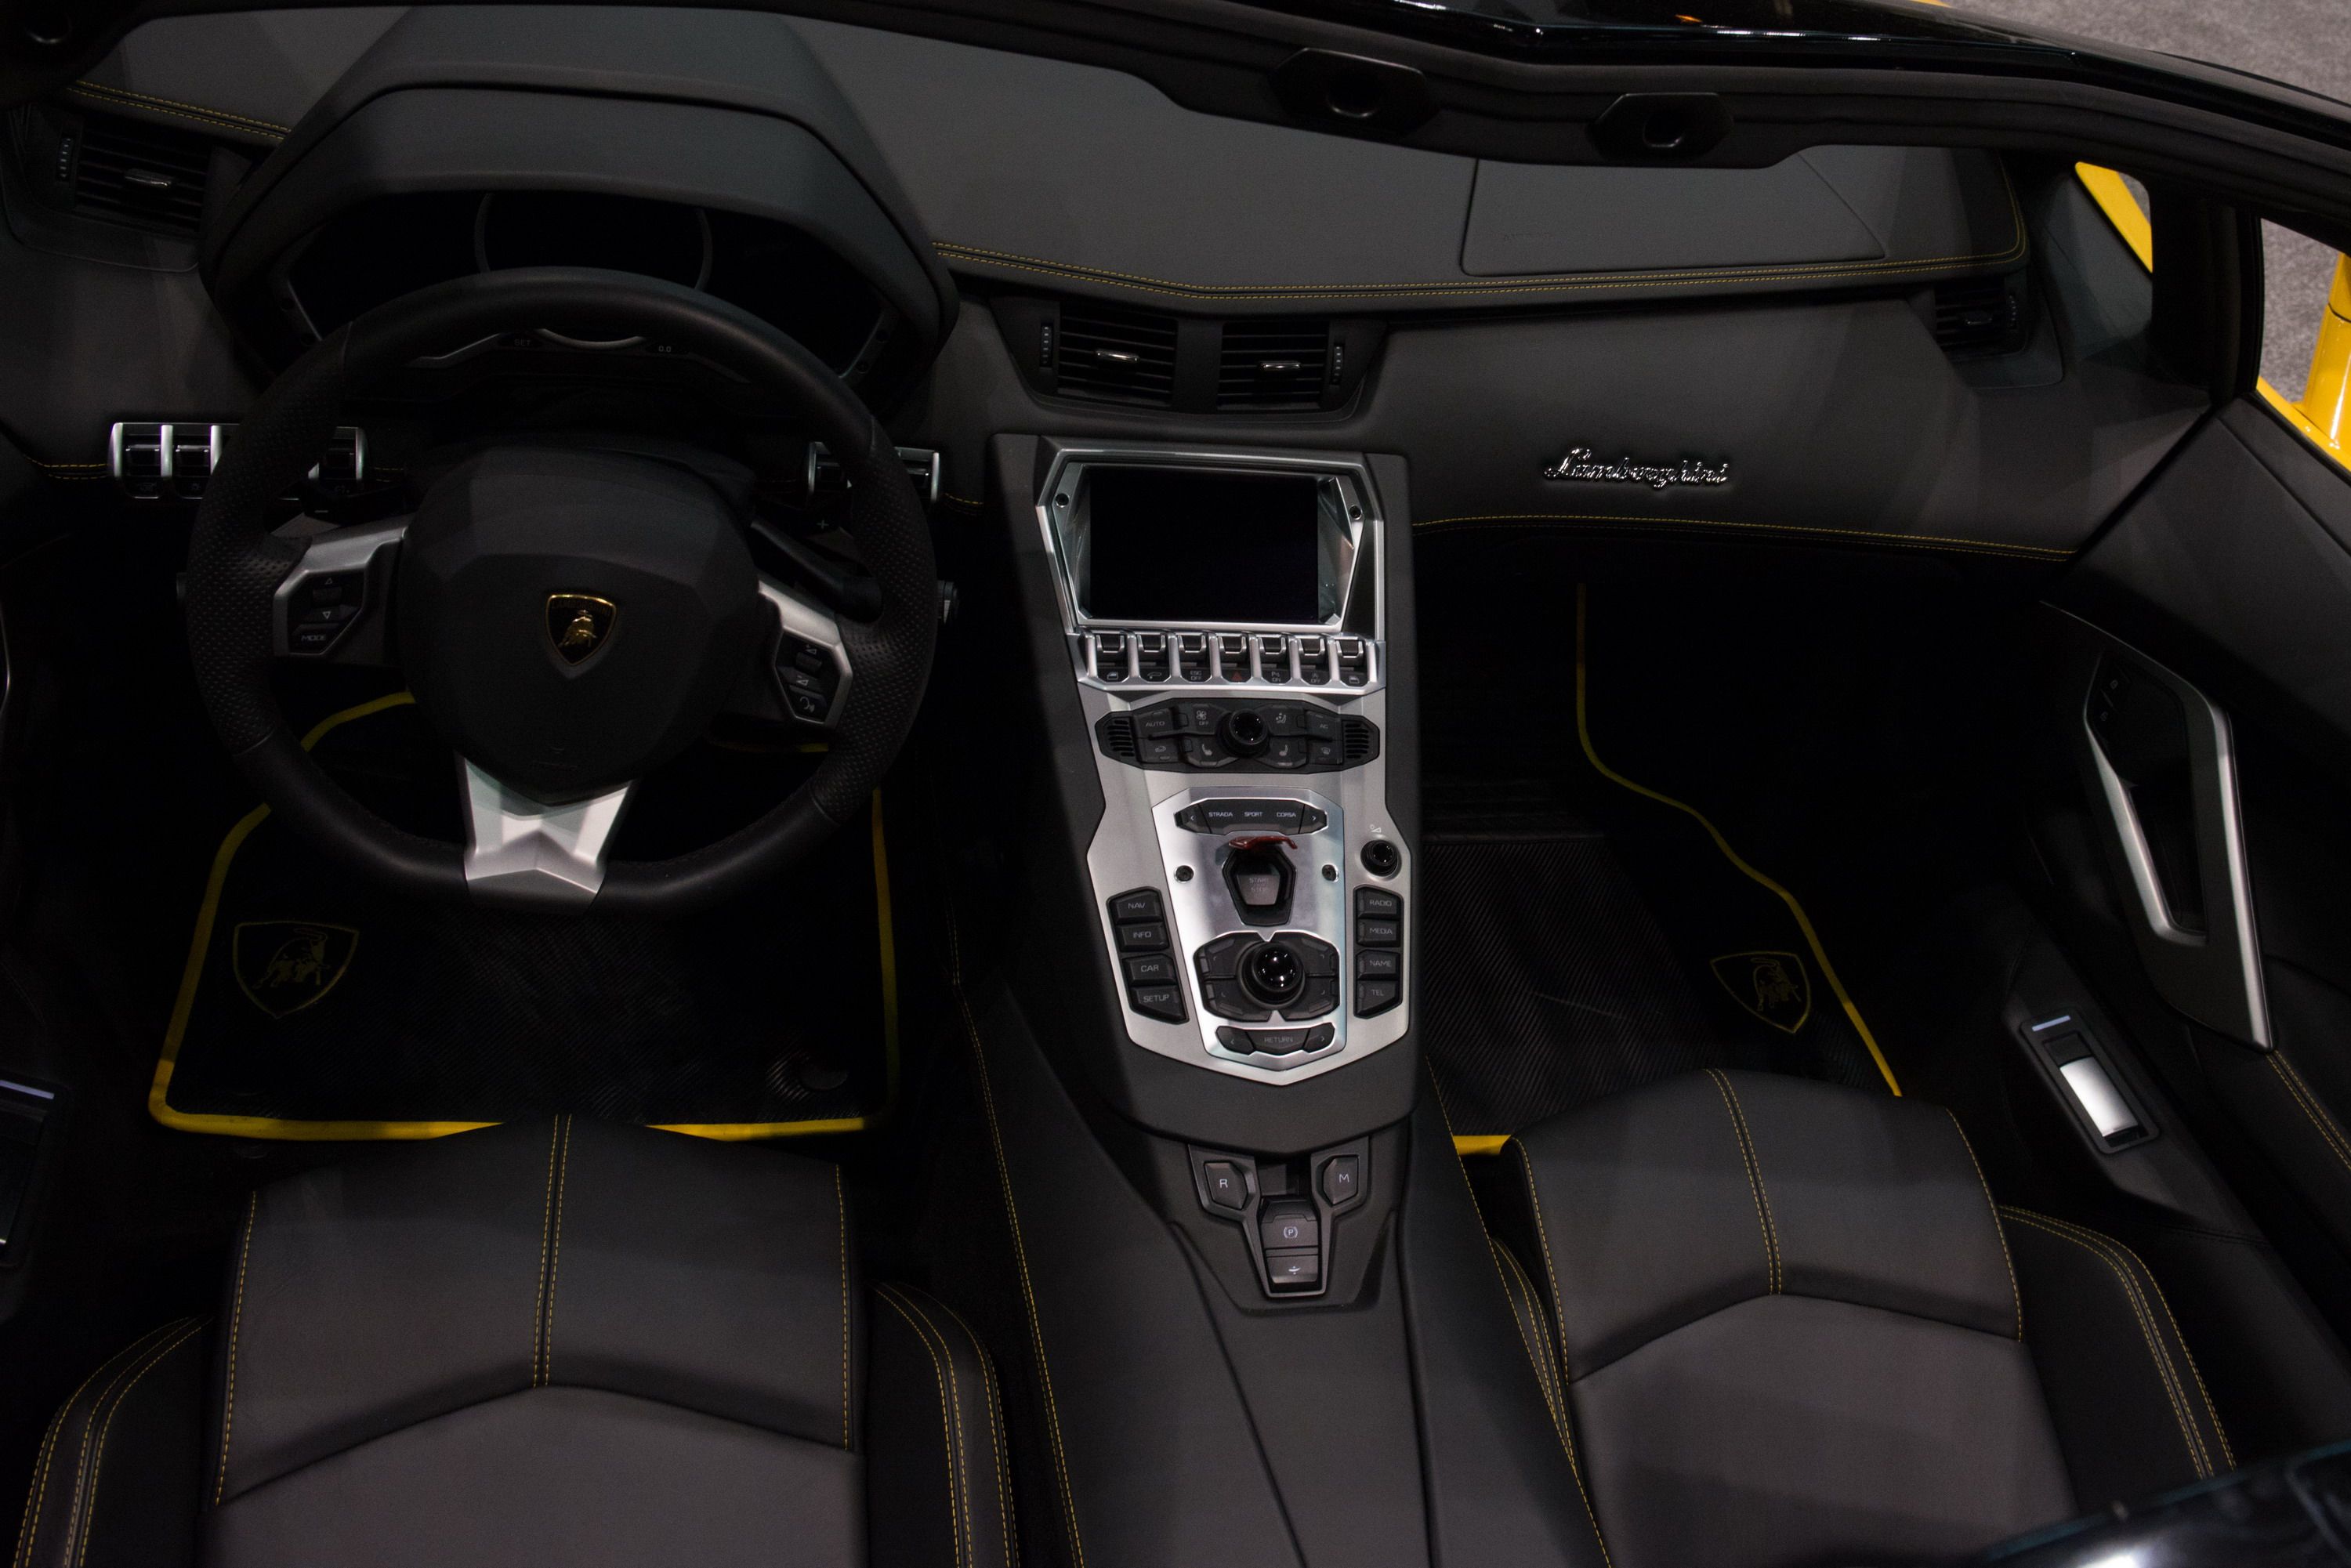 2013 Lamborghini Aventador LP700-4 Roadster